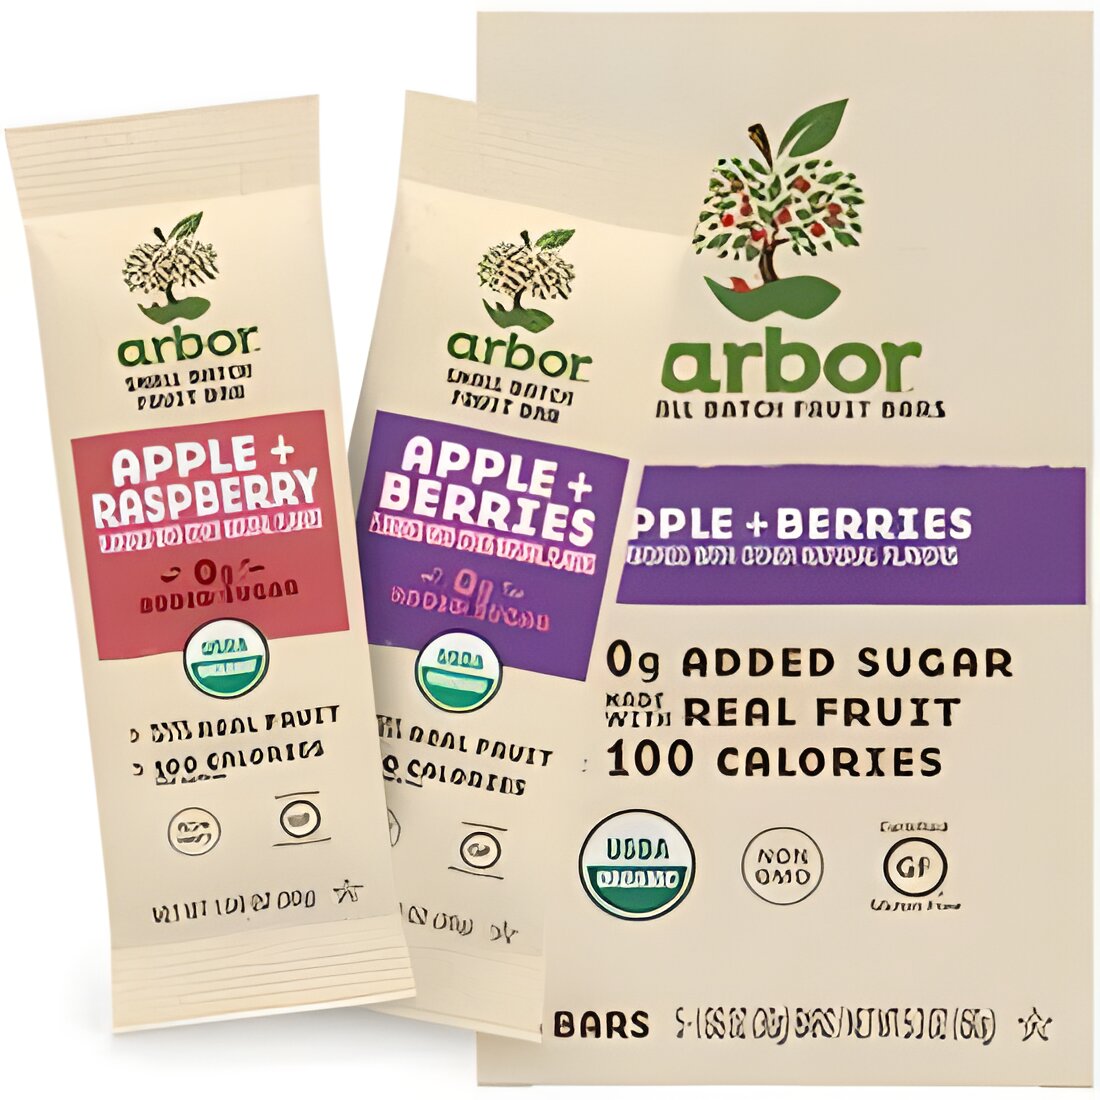 Free Arbor Fruit Bars